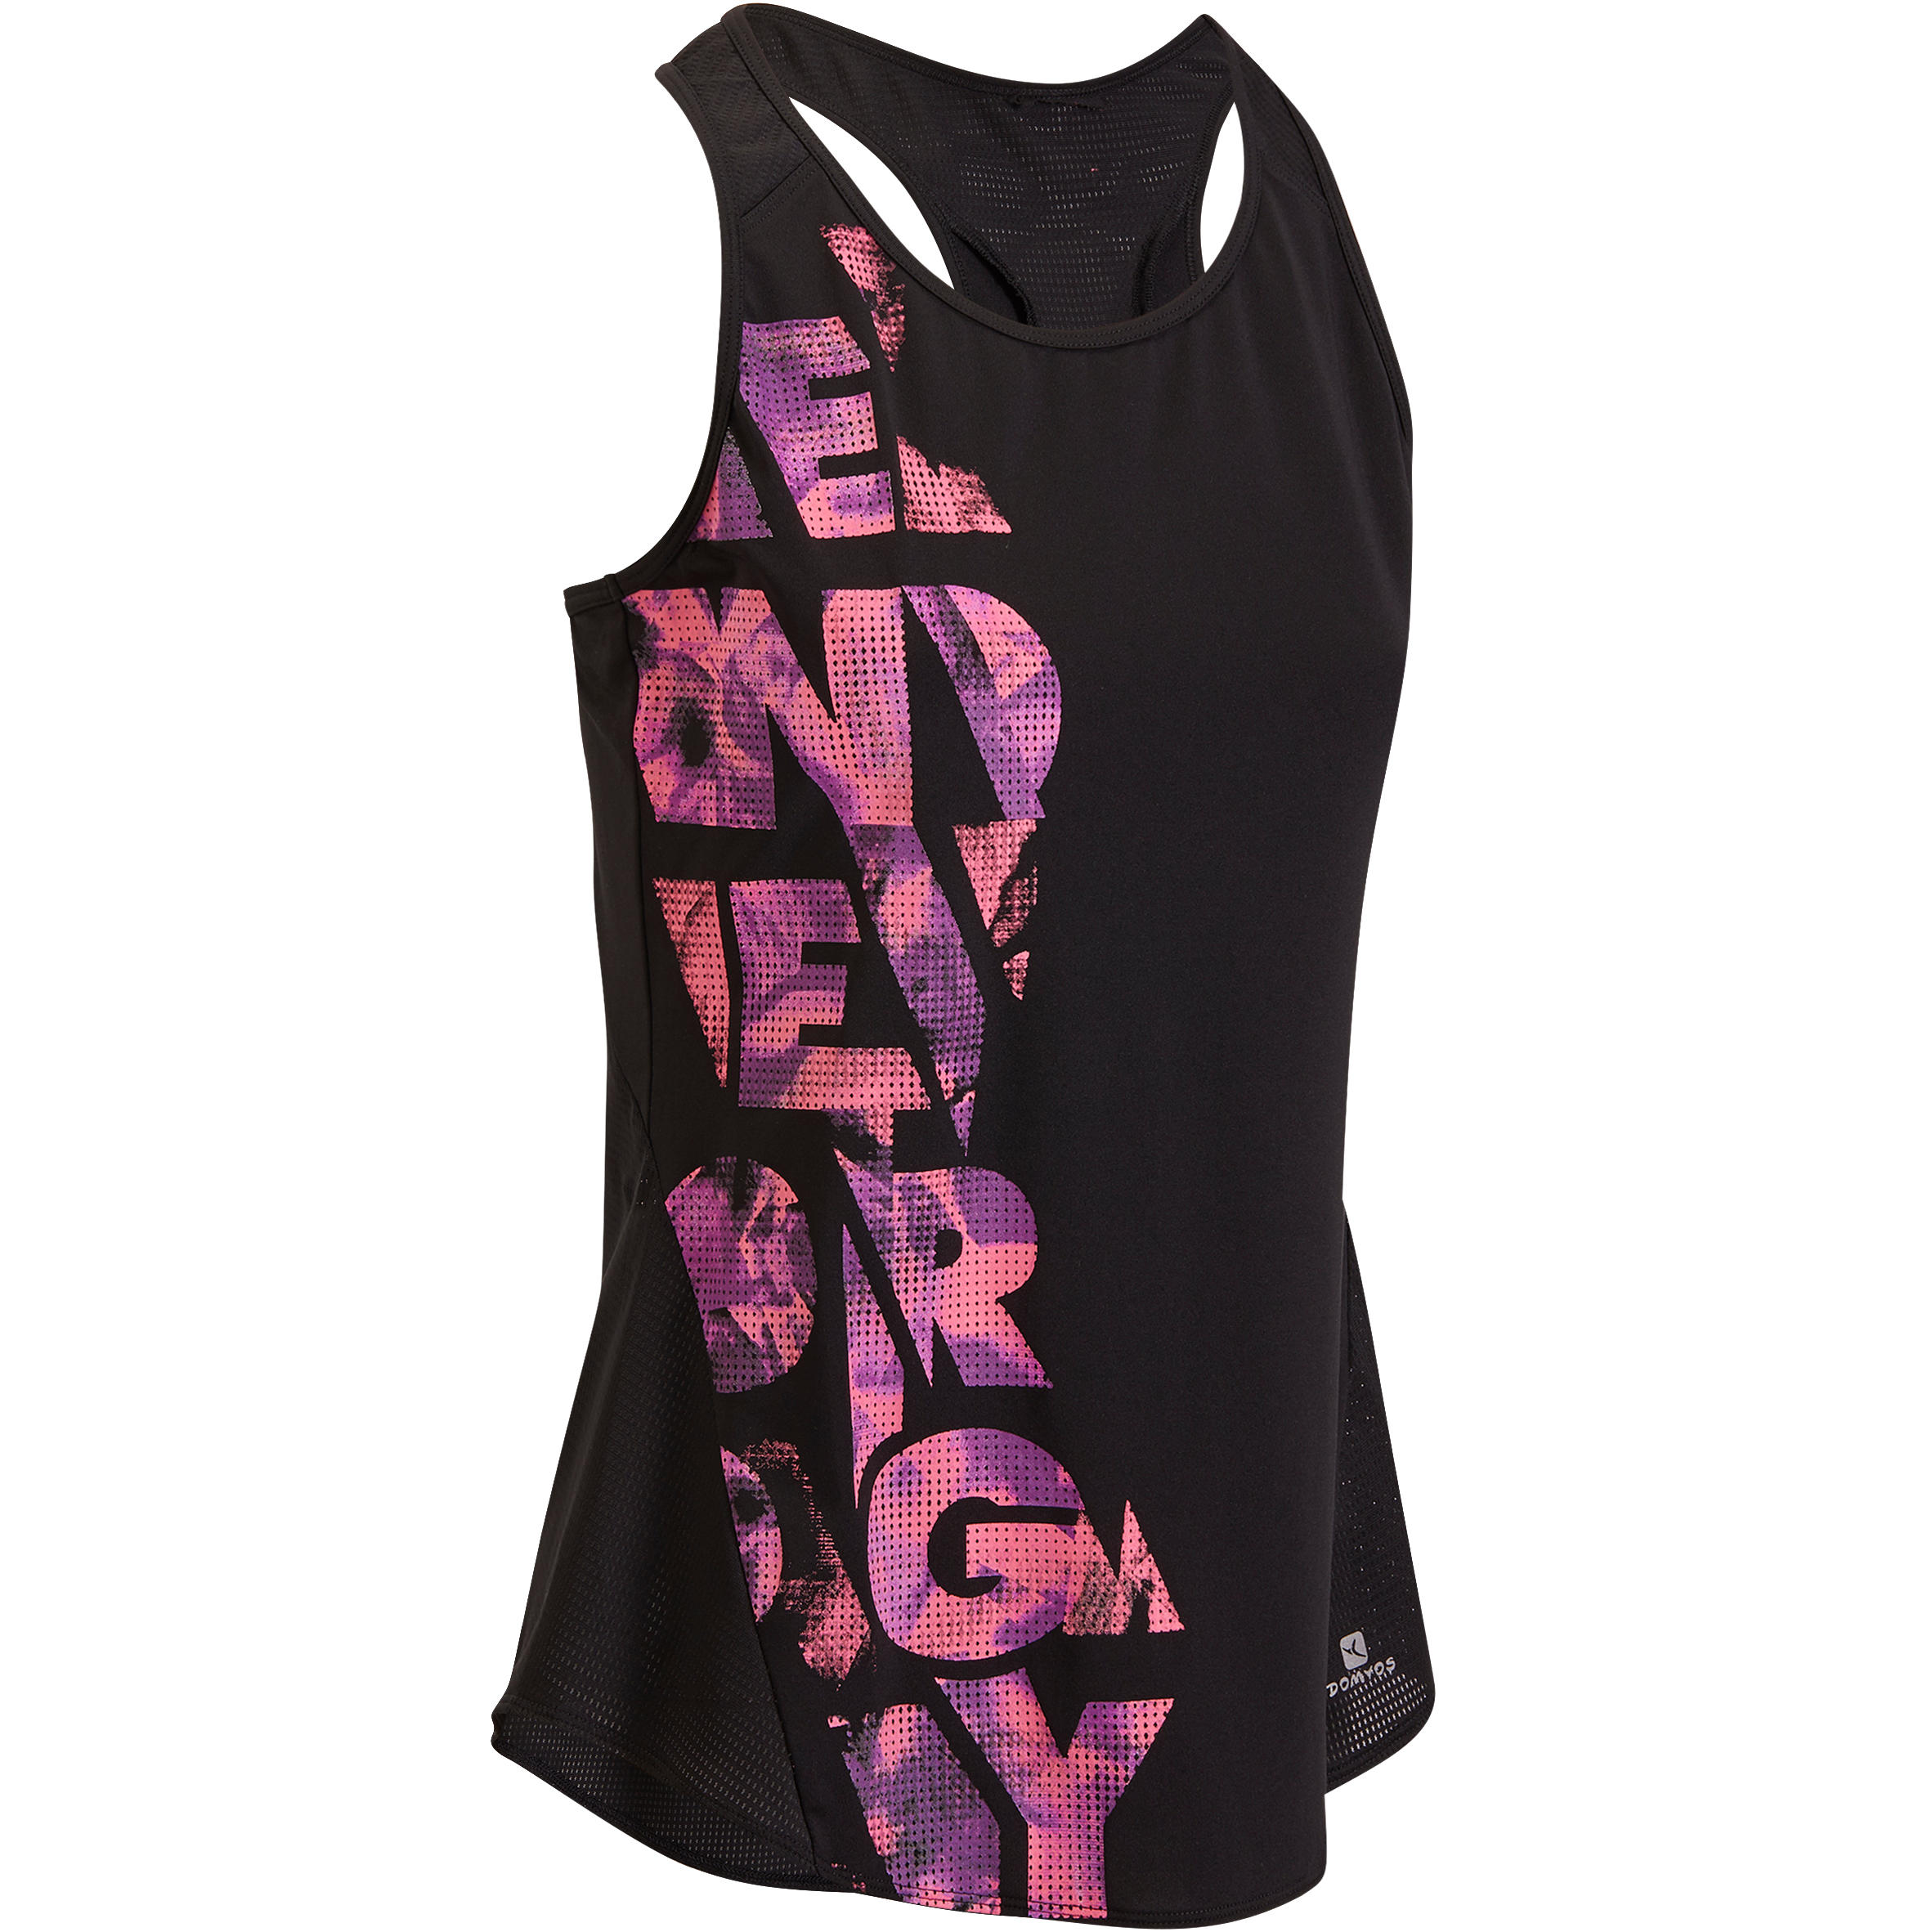 DOMYOS Energy Women's Printed Cardio Fitness Tank Top - Black/Pink